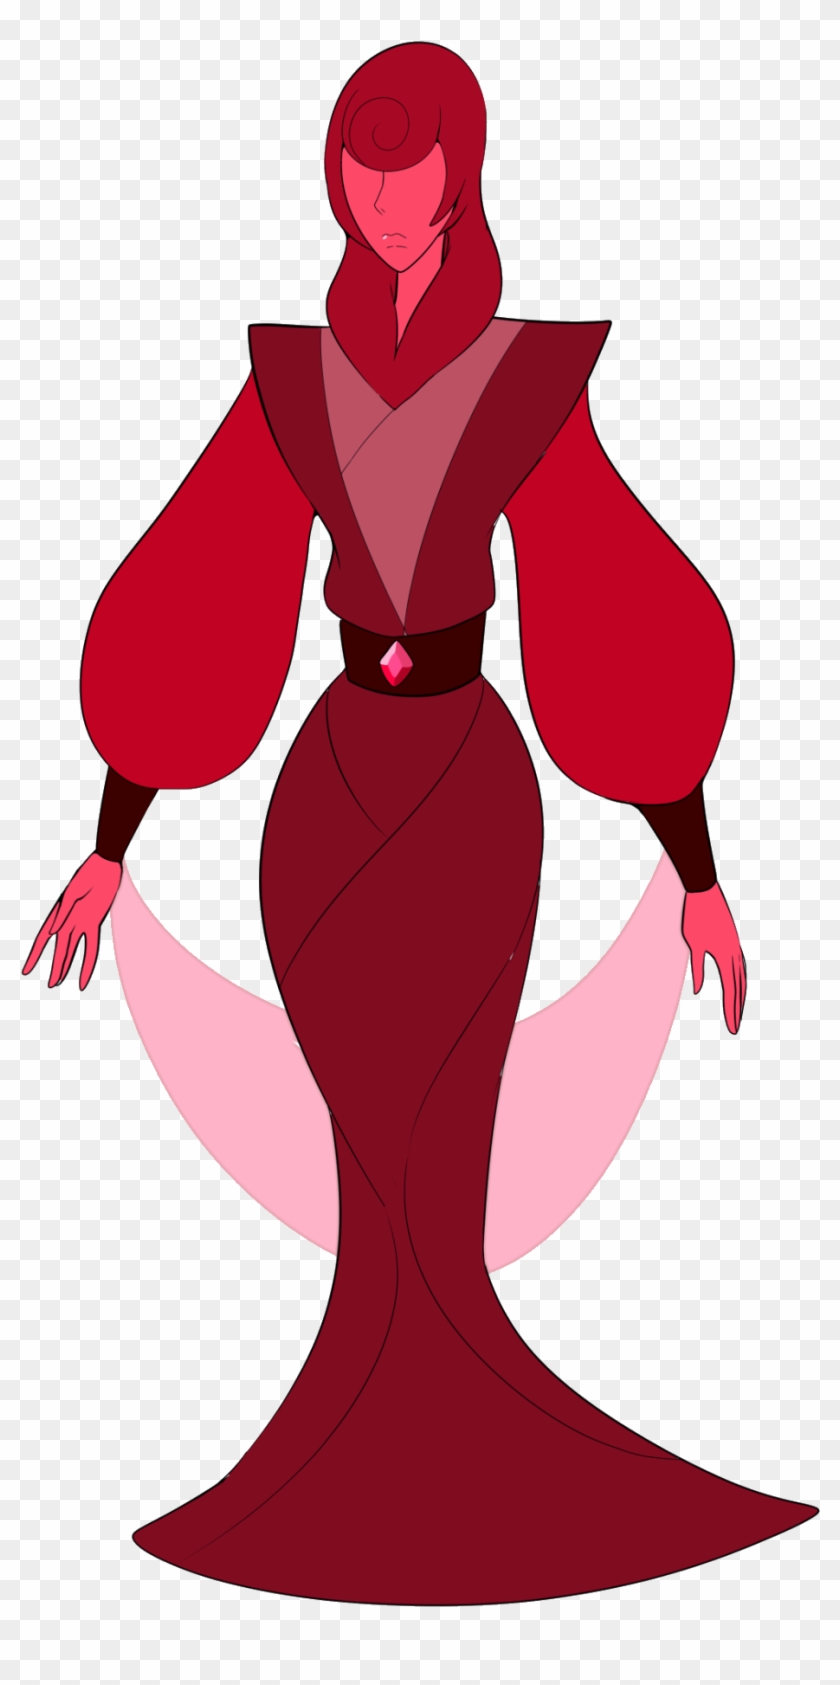 Red Diamond - Red Diamond Steven Universe #659955